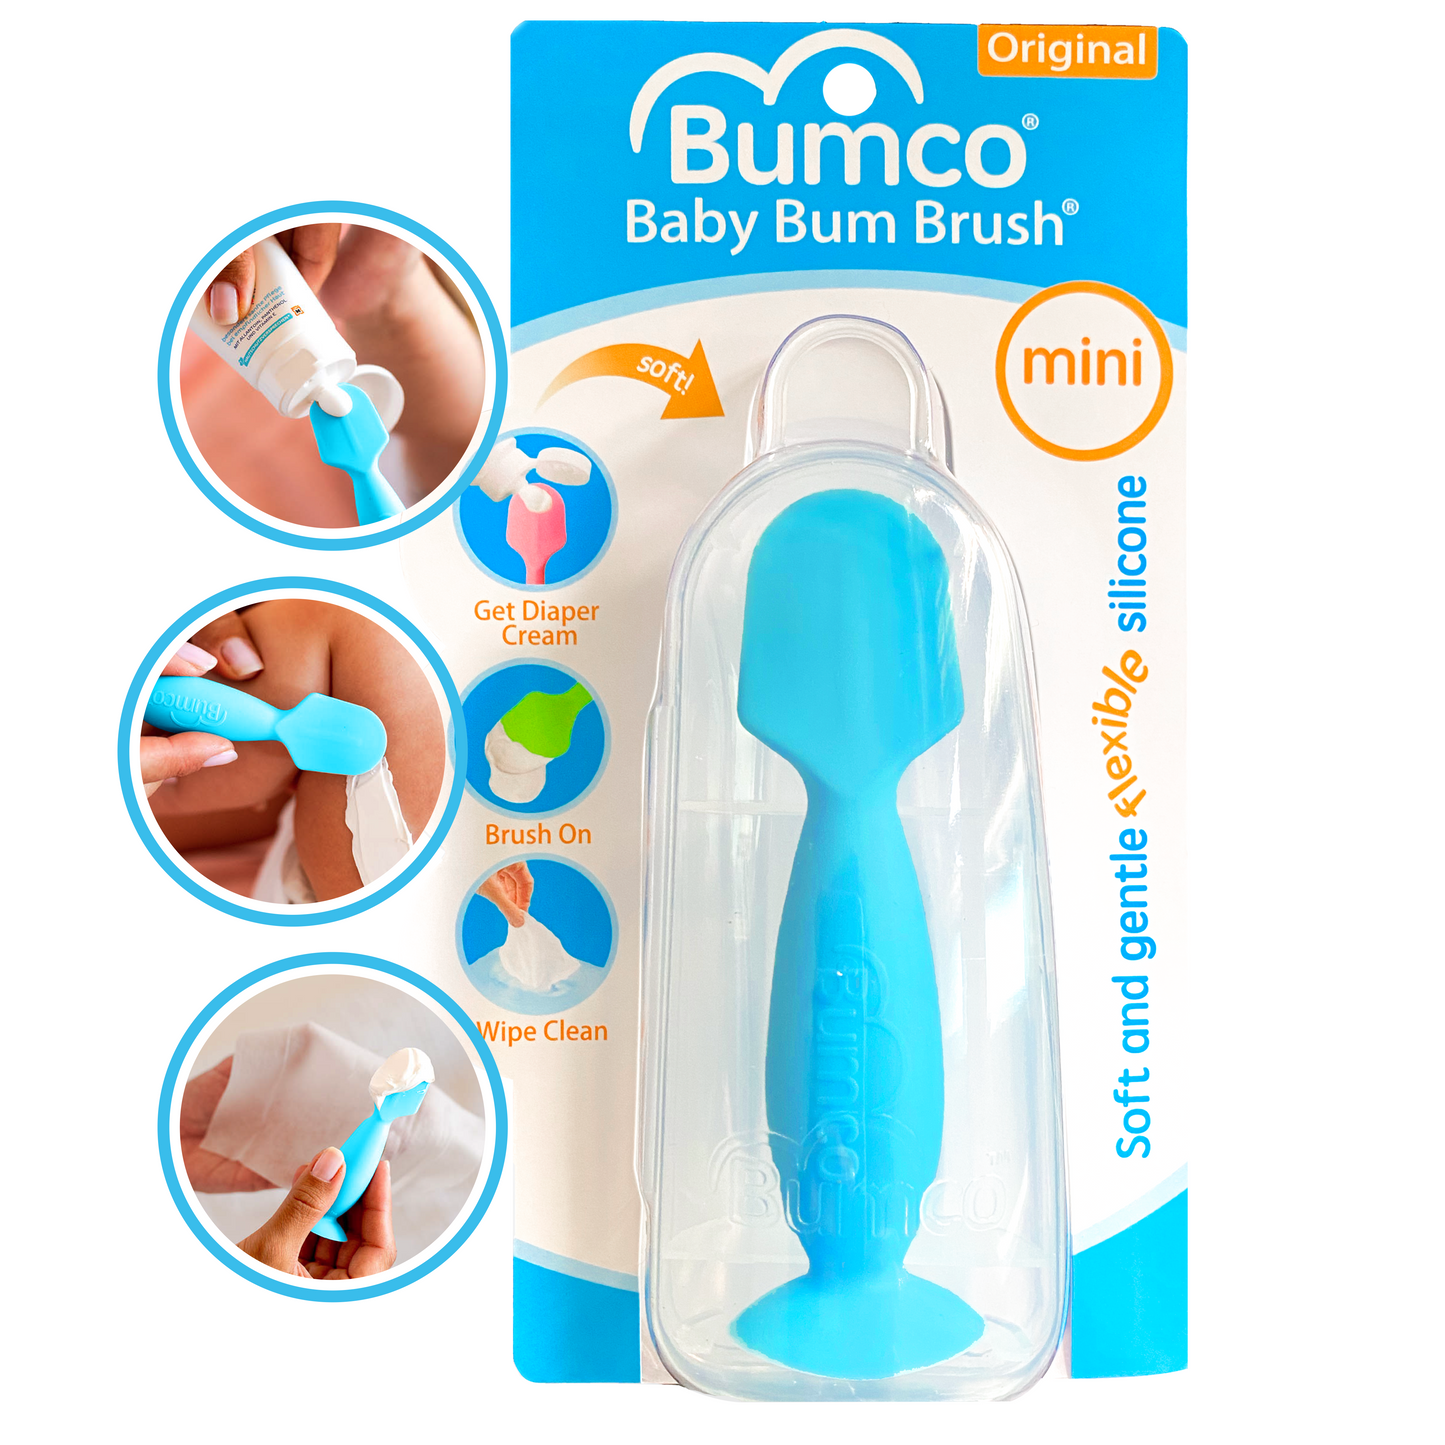 Bumco Mini Baby Bum Brush with Travel Case (Blue)